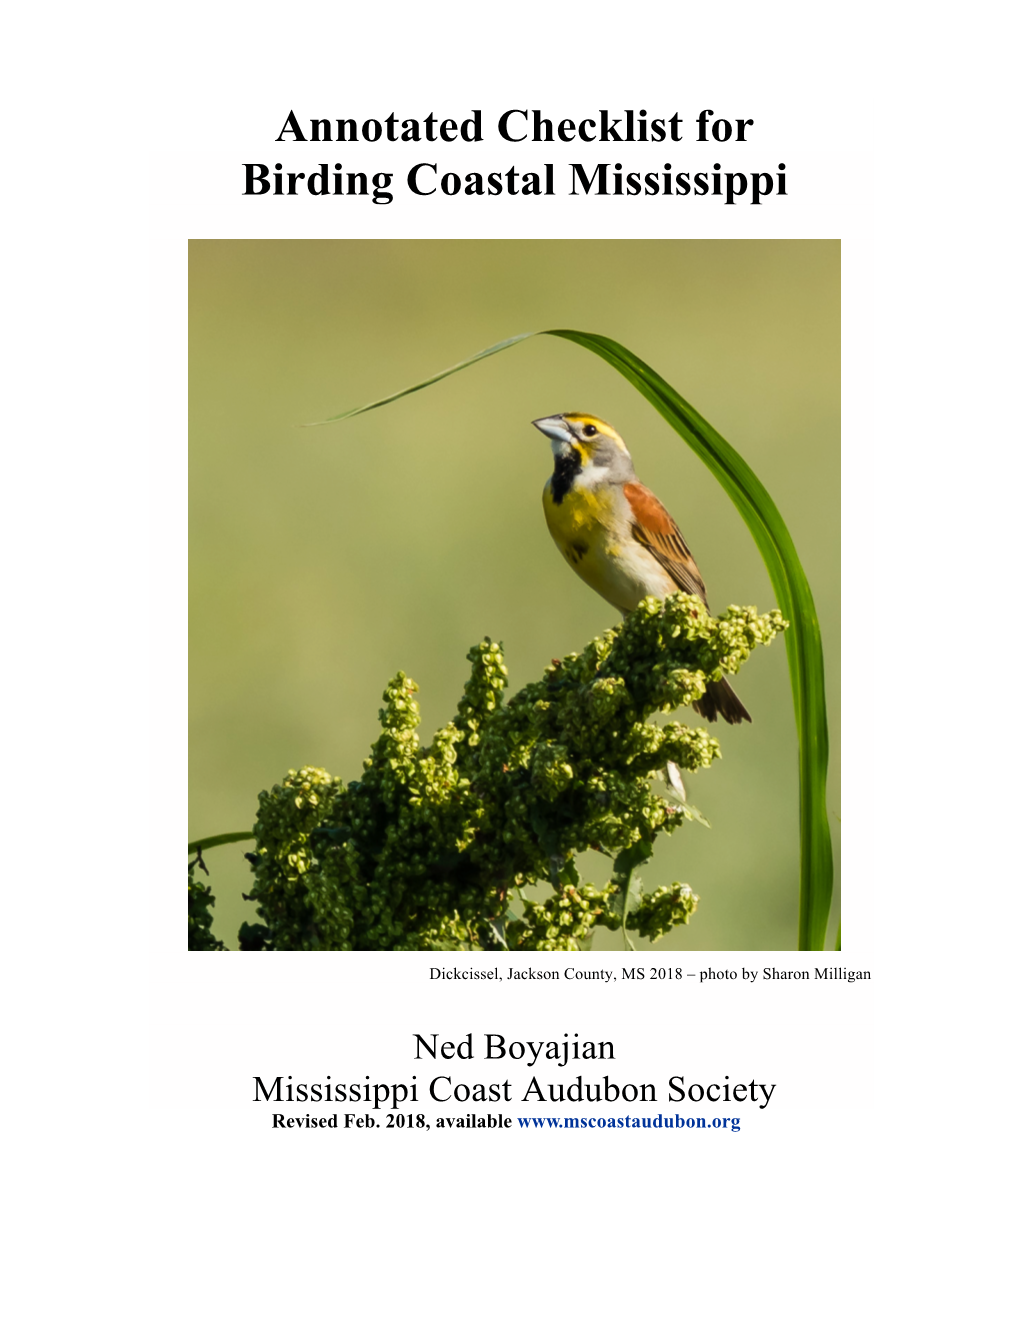 Annotated Checklist for Birding Coastal Mississippi